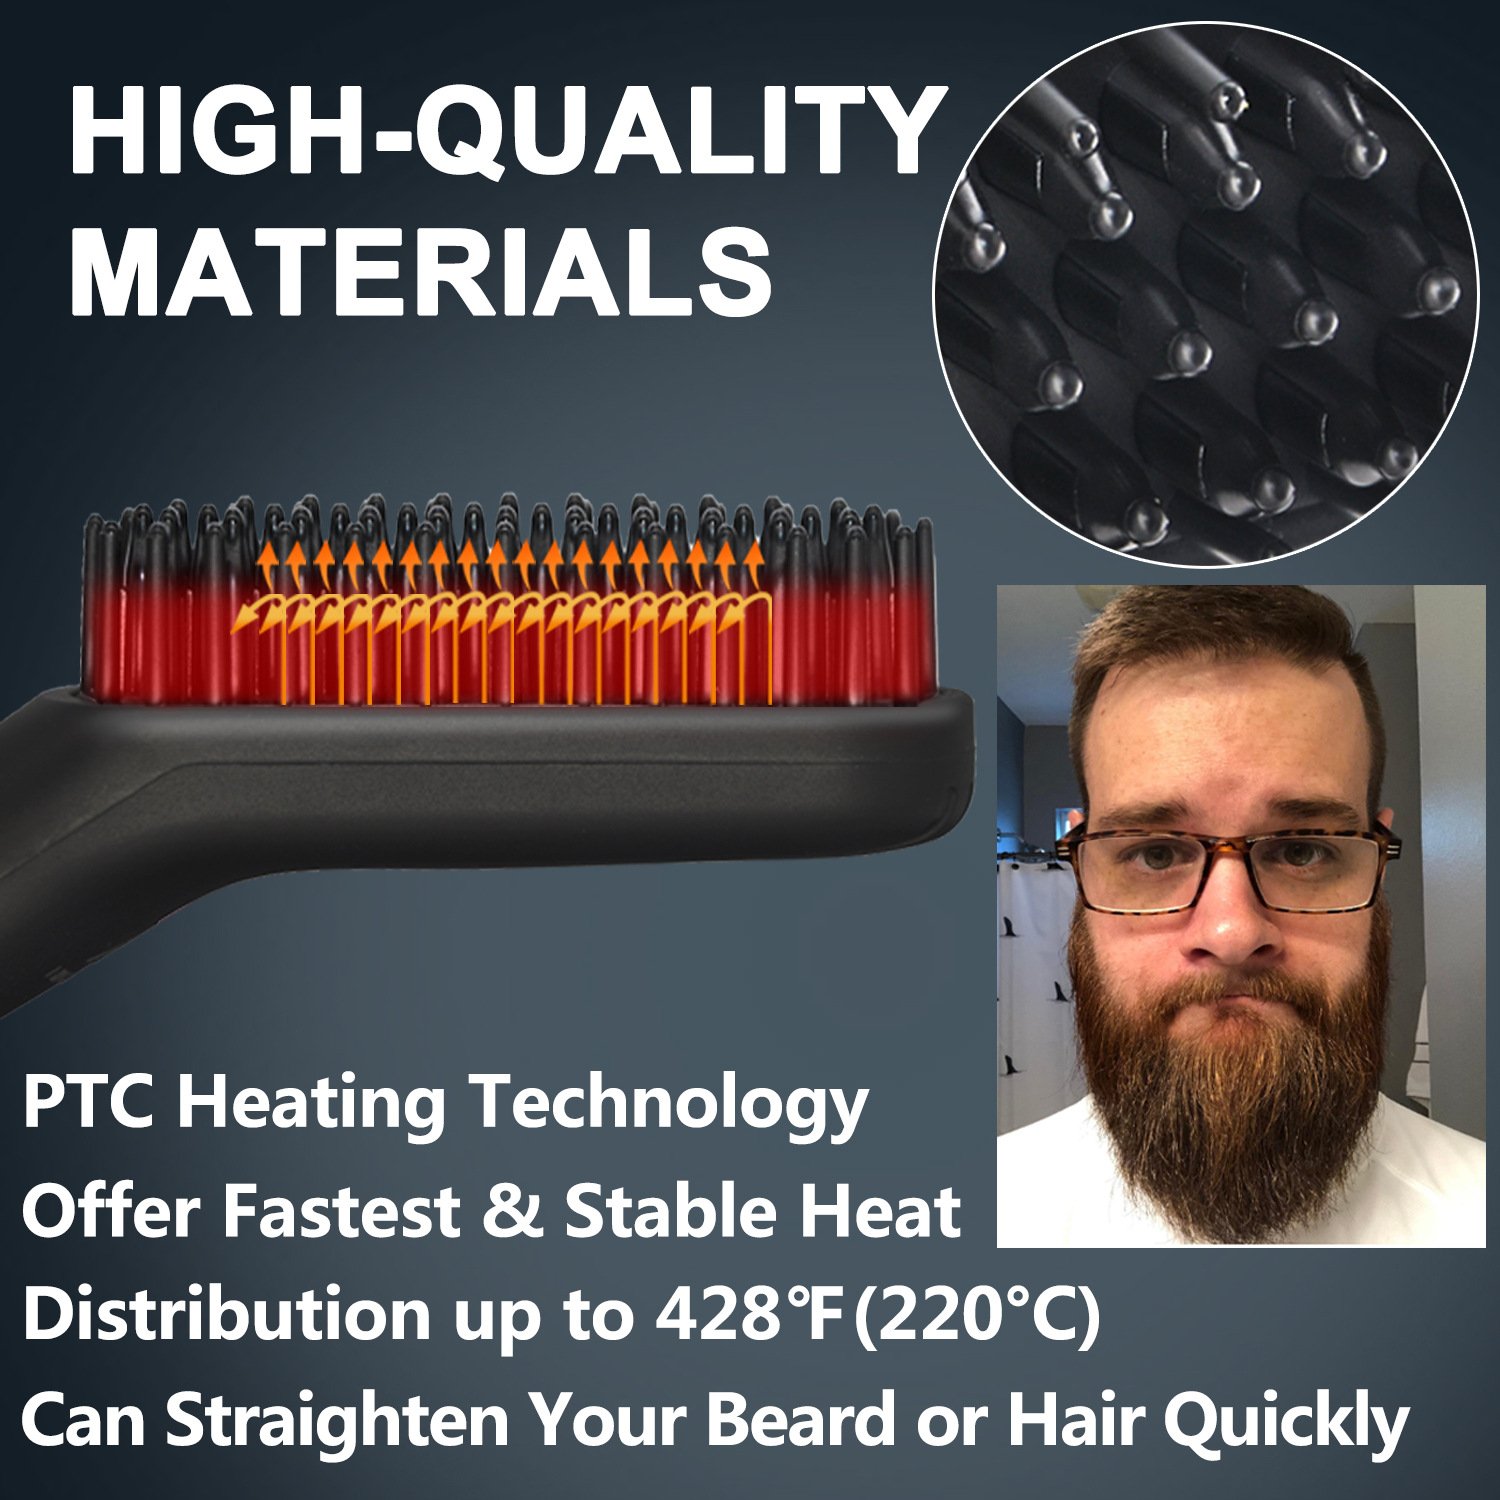 Ion 3-in-1 Men's Beard Straightener（Buy 2 Free Shipping）